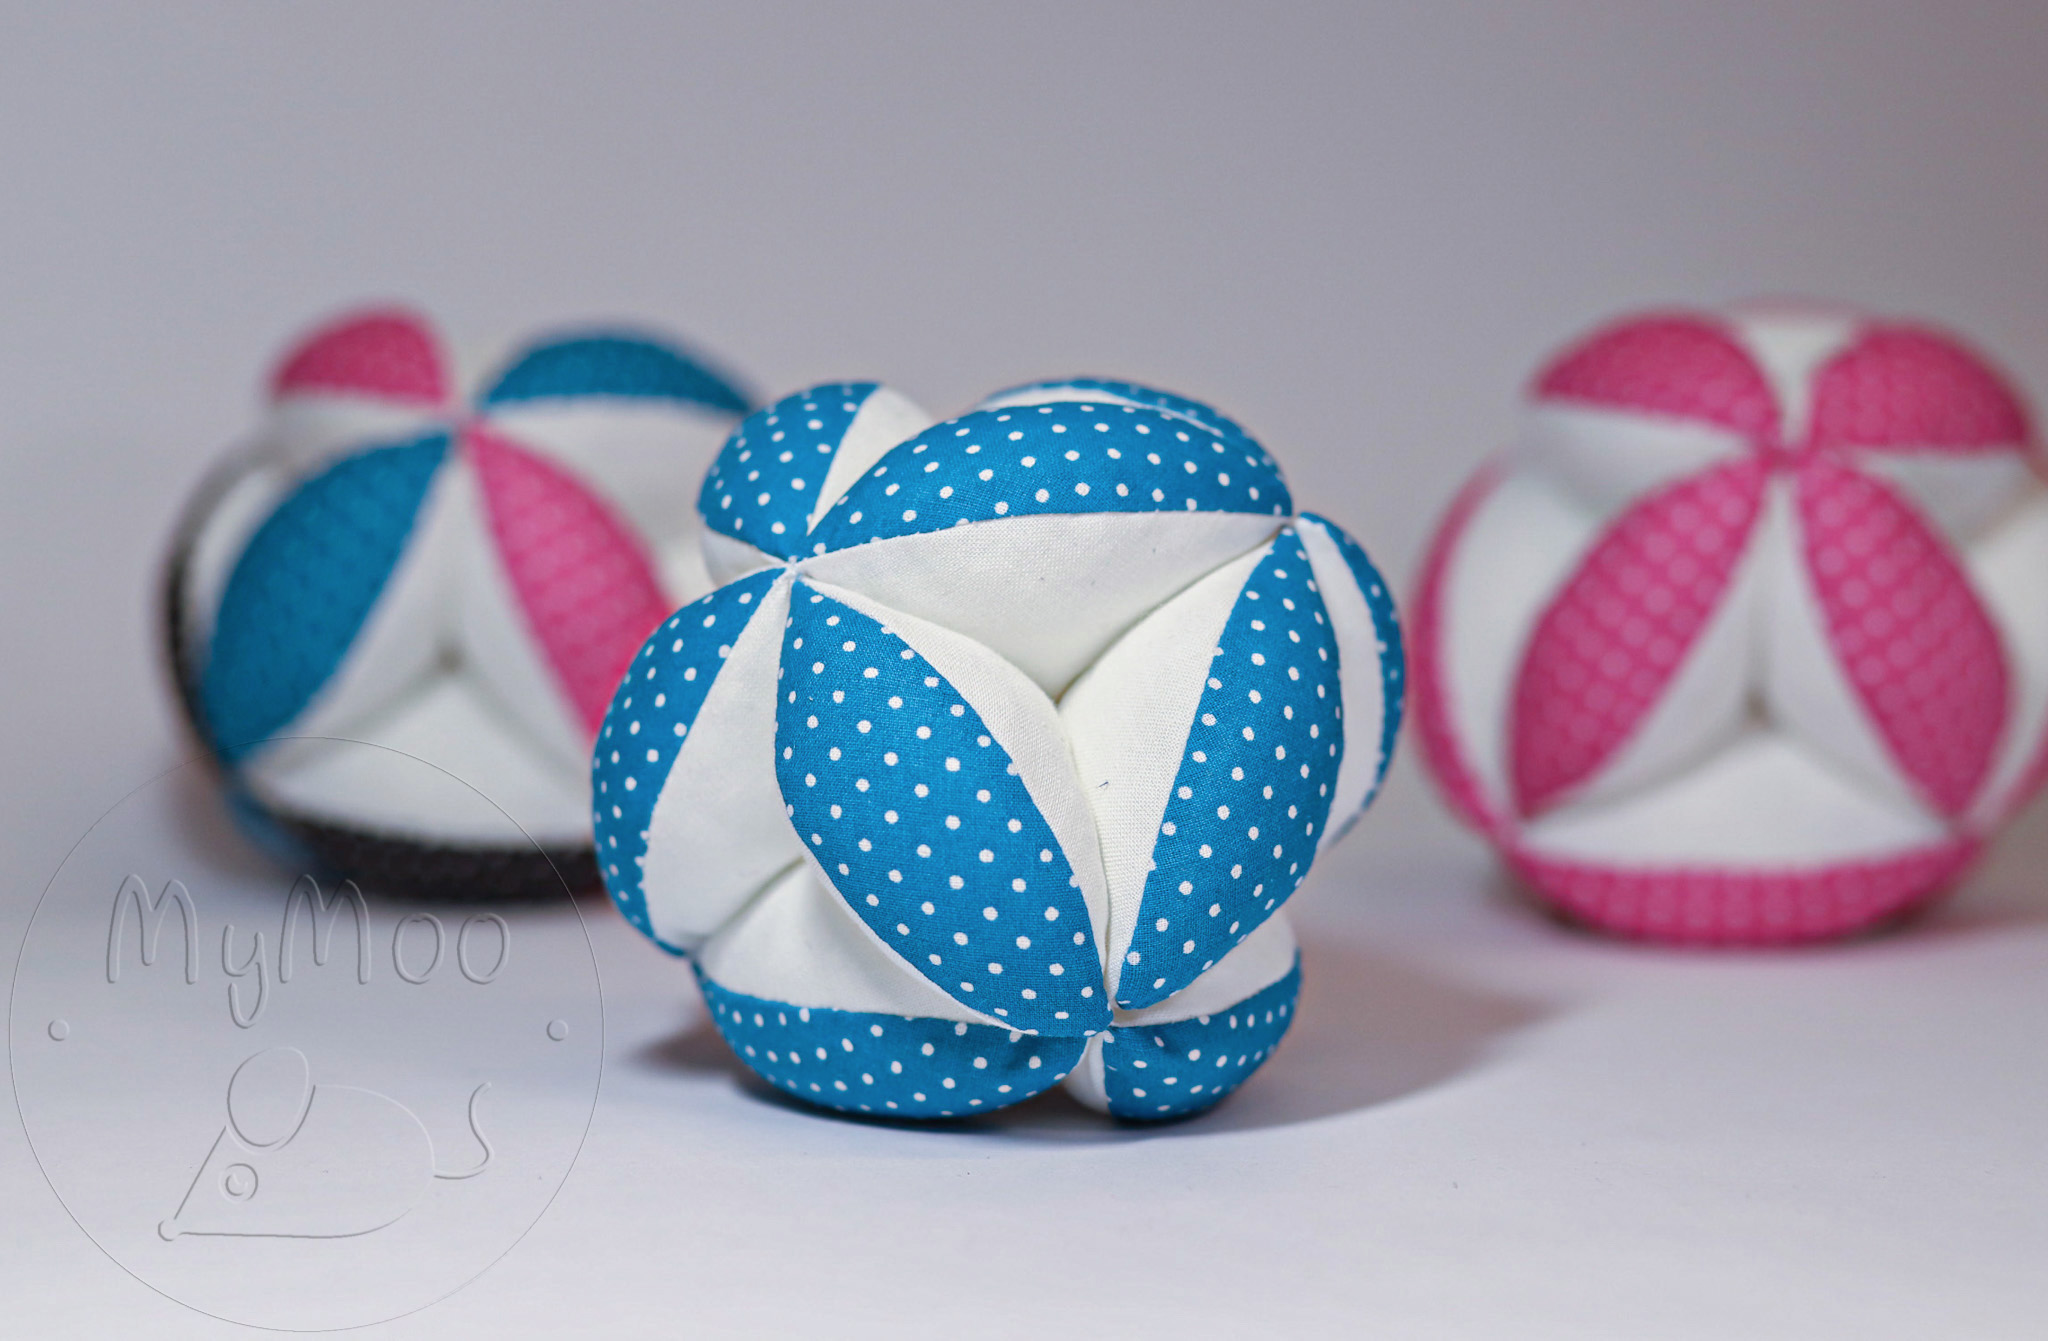 MyMoo Montessori Gripping Ball - Polka Dots/Turquoise,MyMoo Montessori Gripping Ball - Polka Dots/Turquoise